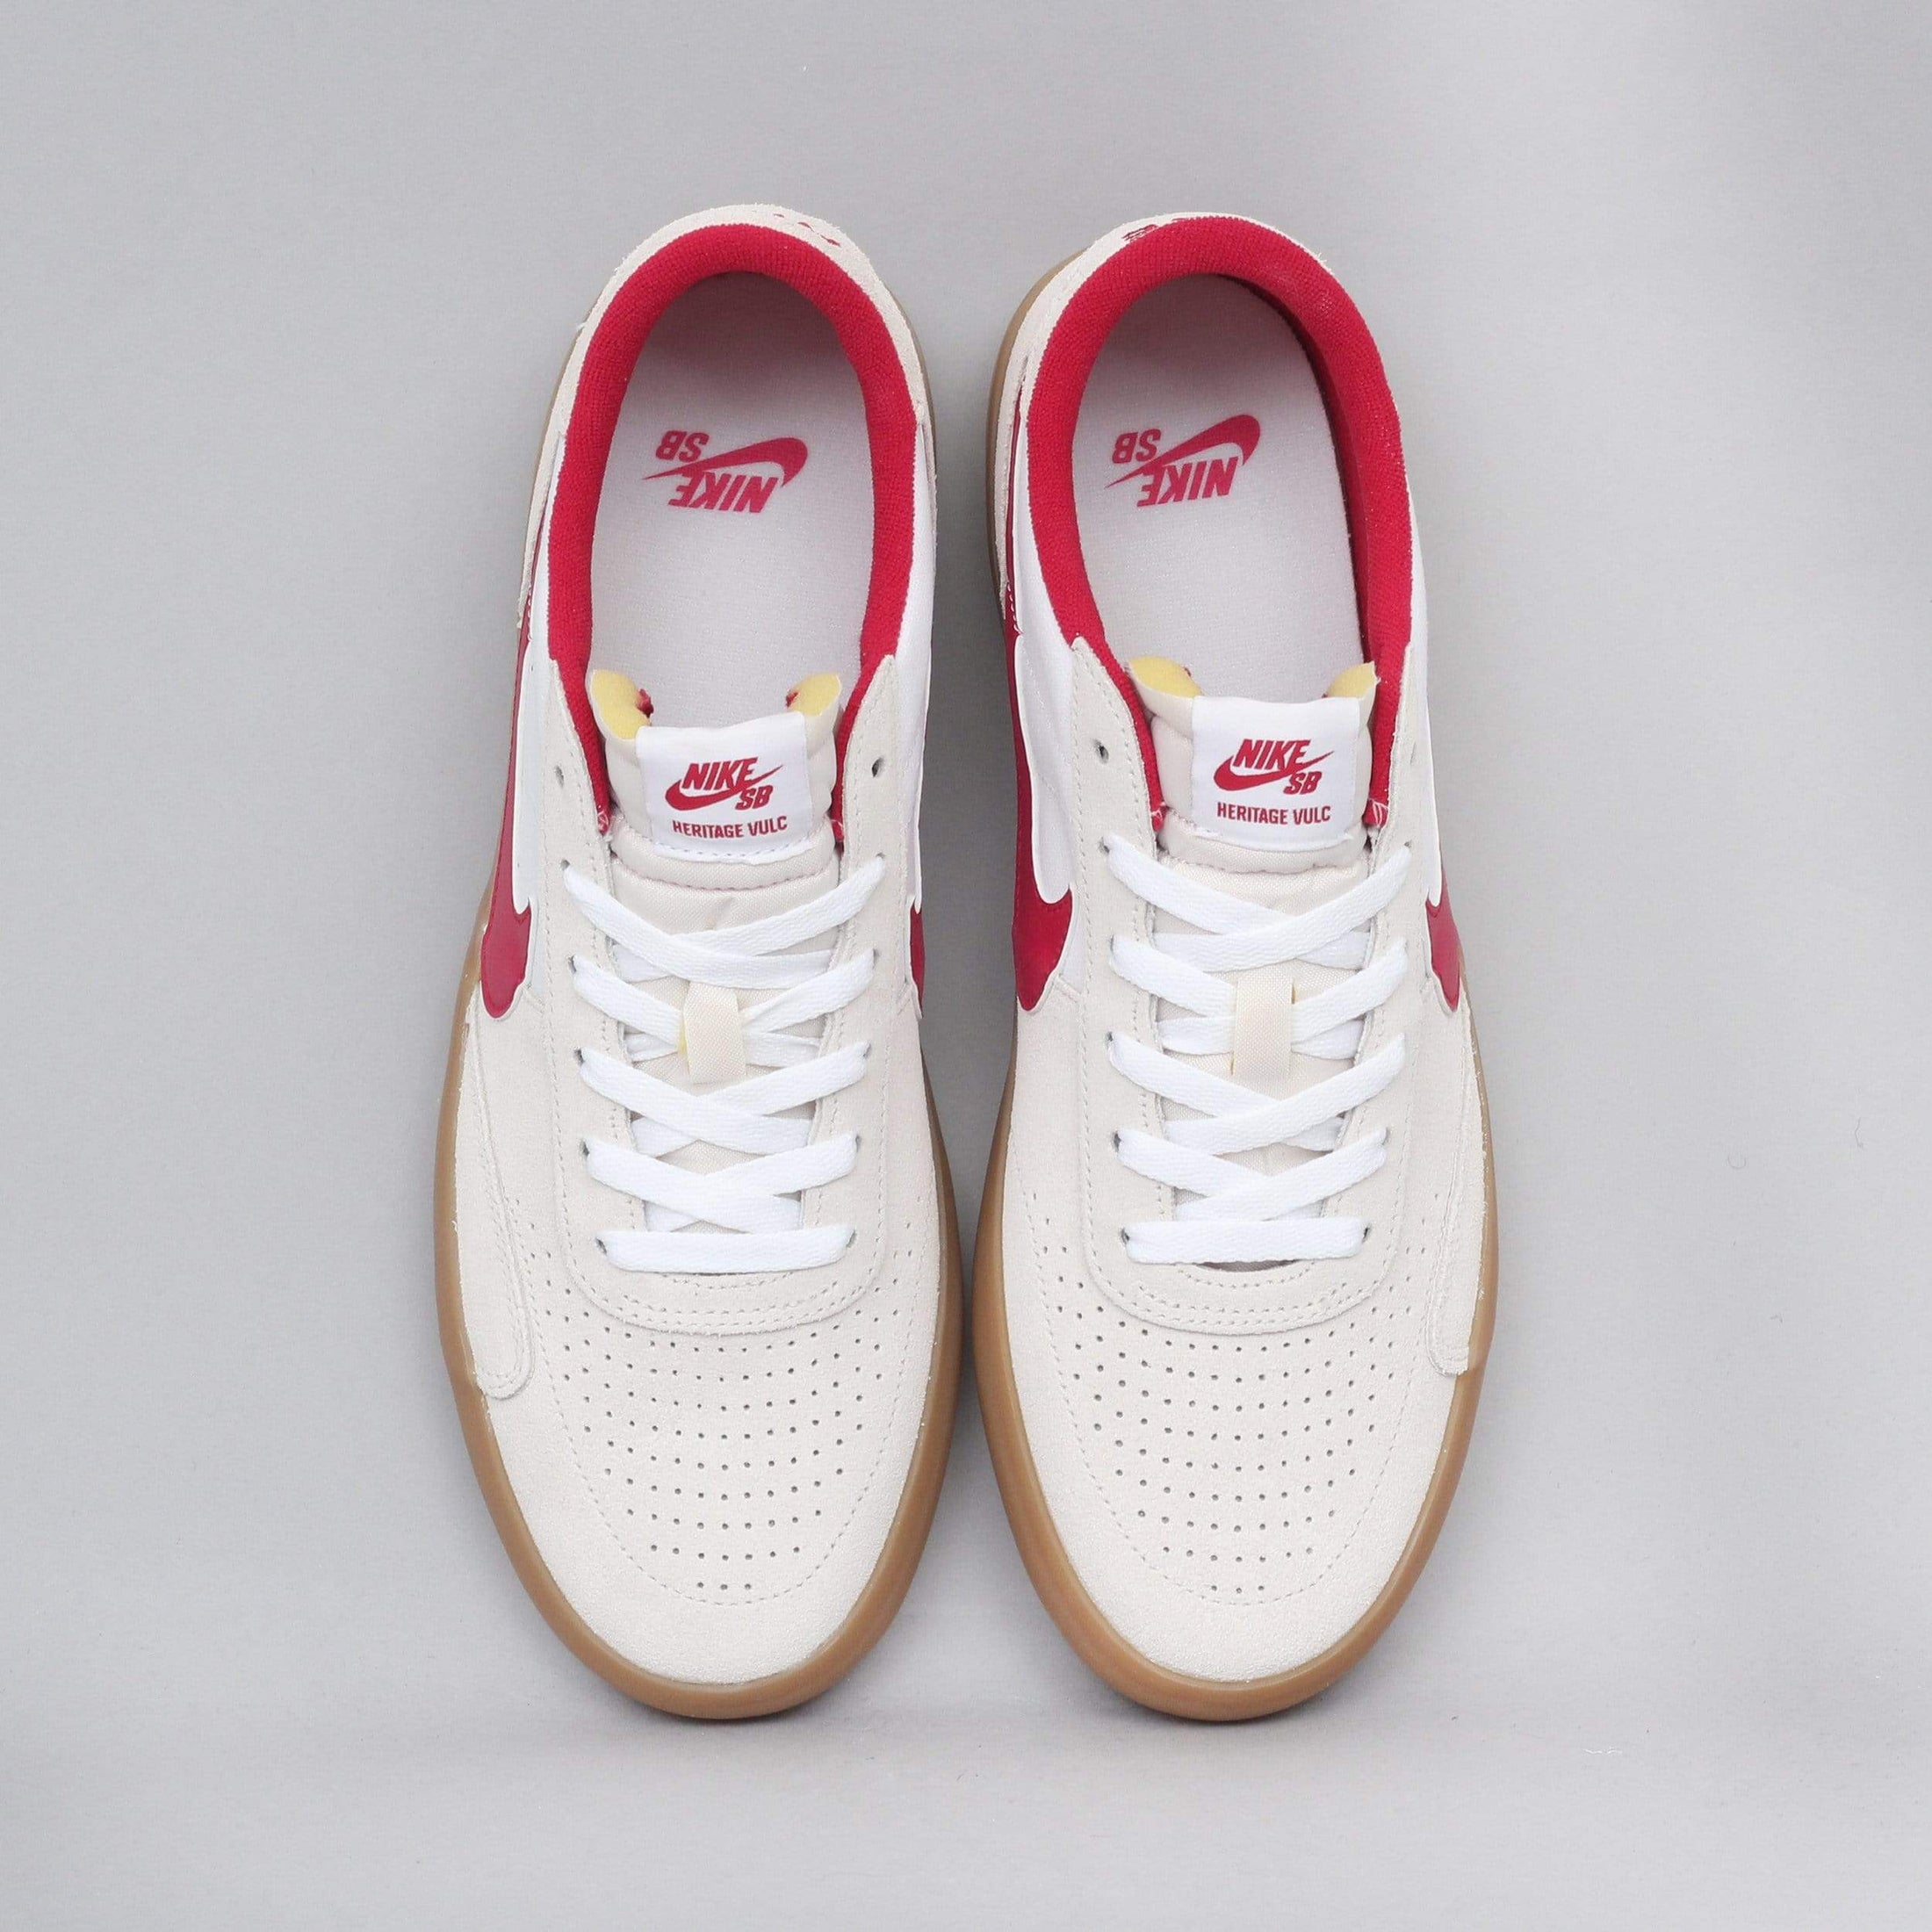 Nike SB Heritage Vulc Shoes Summit White / Cardinal Red - White